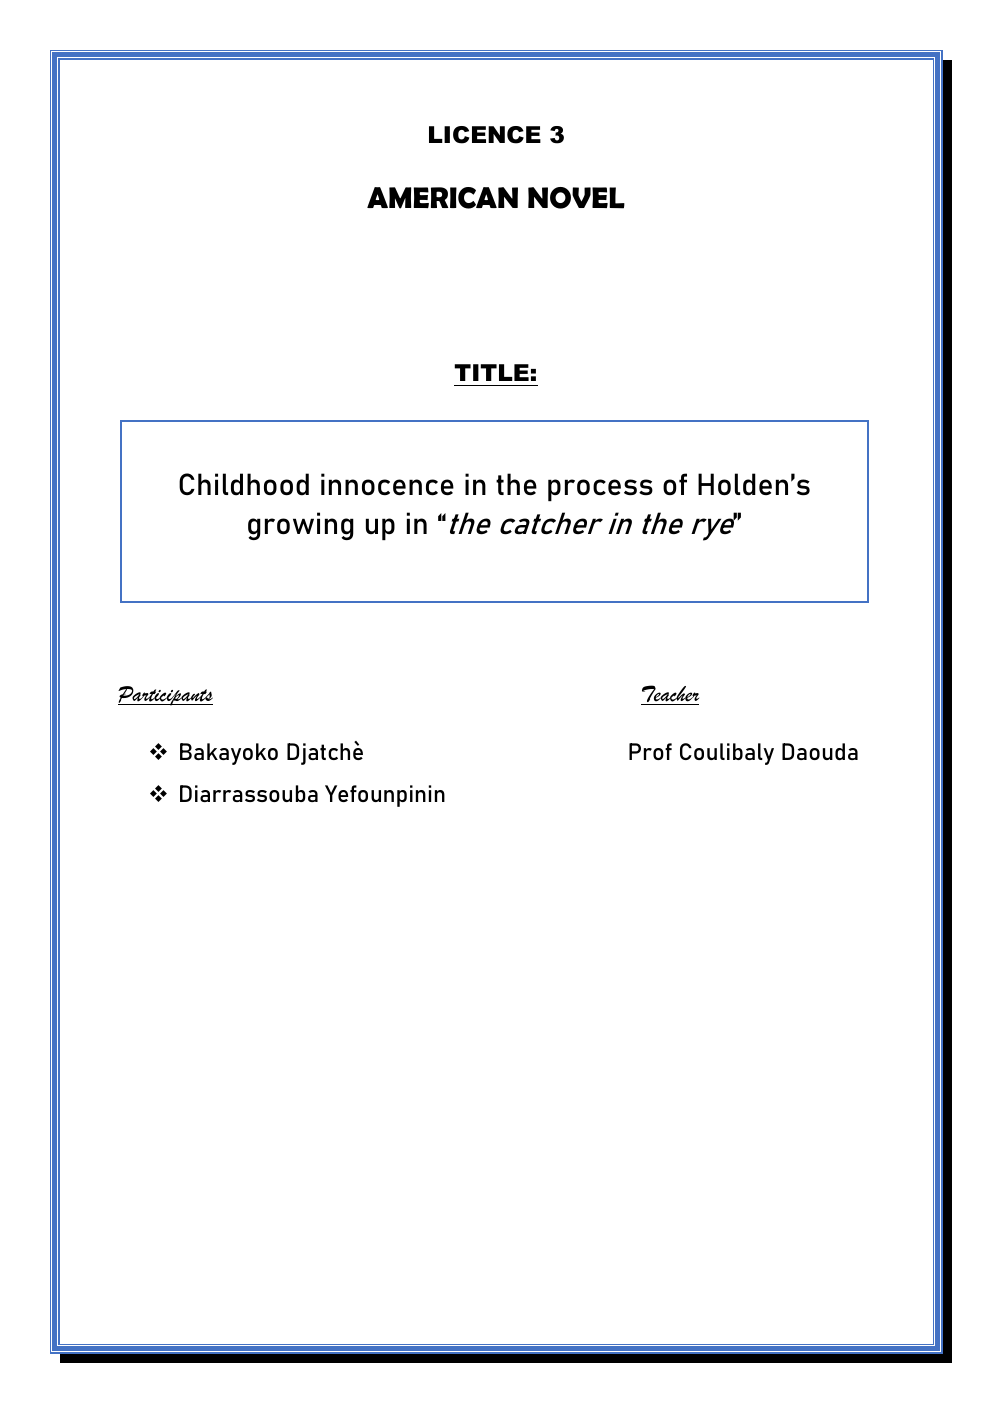 Prévisualisation du document LICENCE 3  AMERICAN NOVEL  TITLE:  Childhood innocence in the process of Holden’s